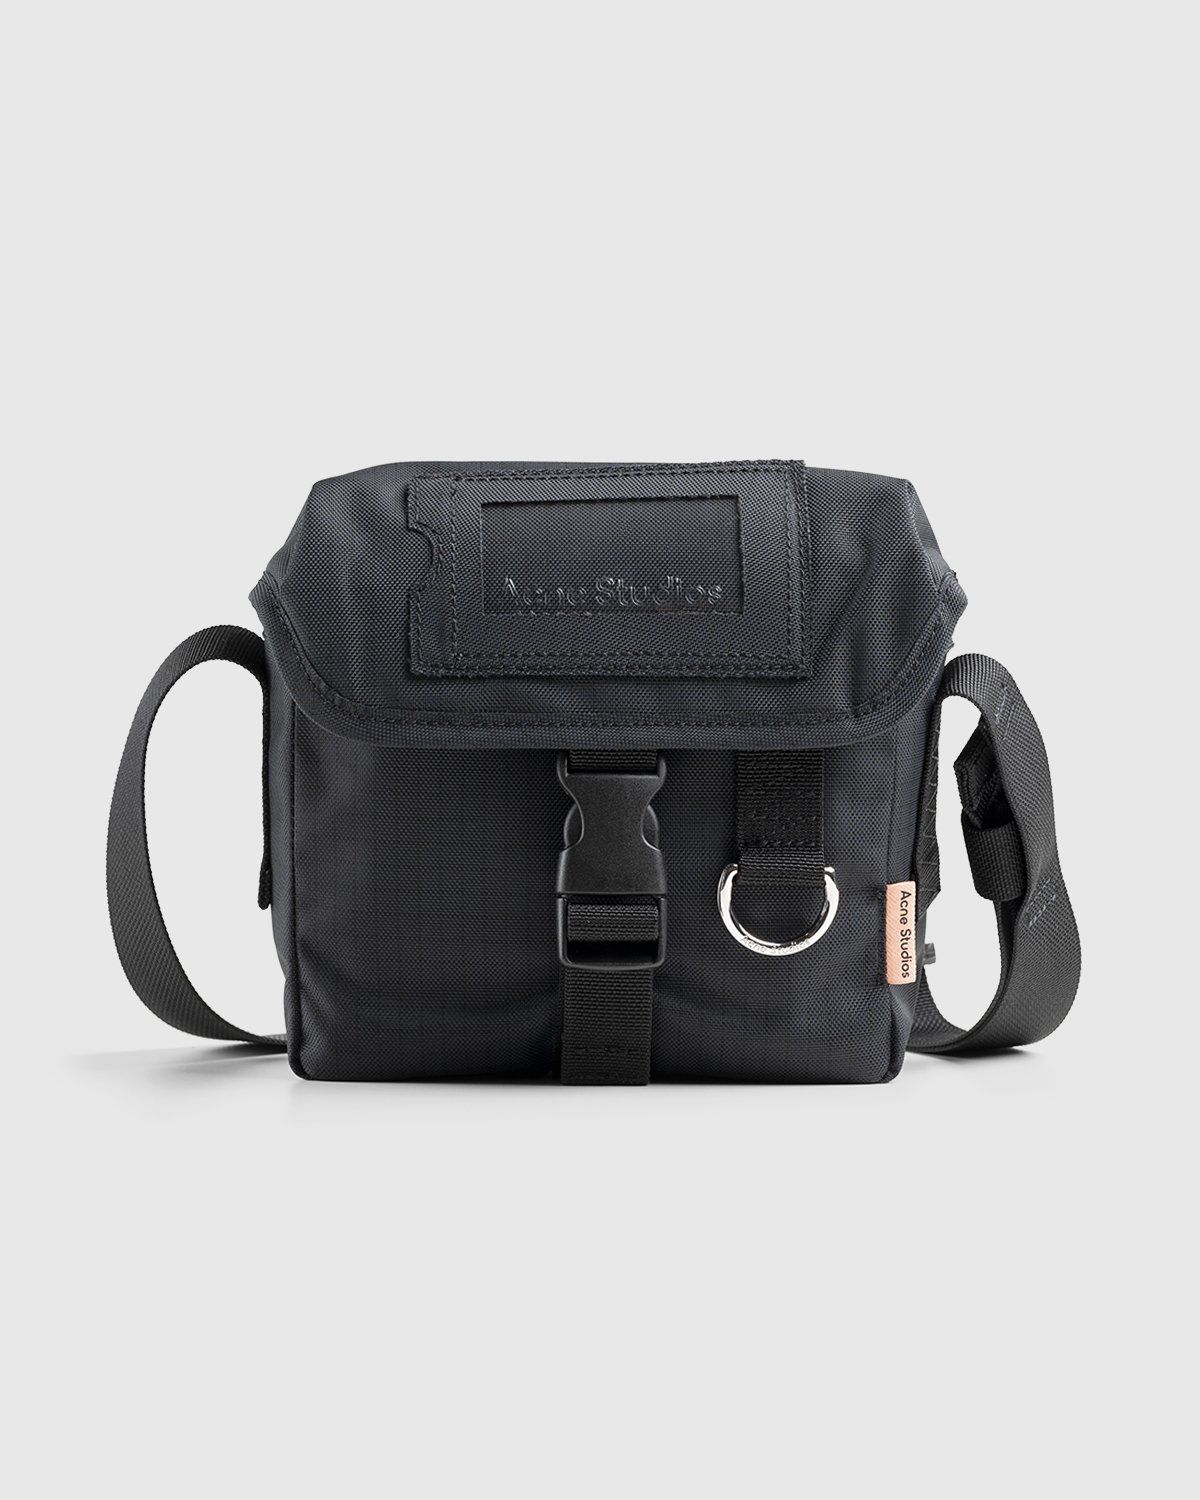 Acne Studios – Small Messenger Bag Black - Shoulder Bags - Black - Image 1